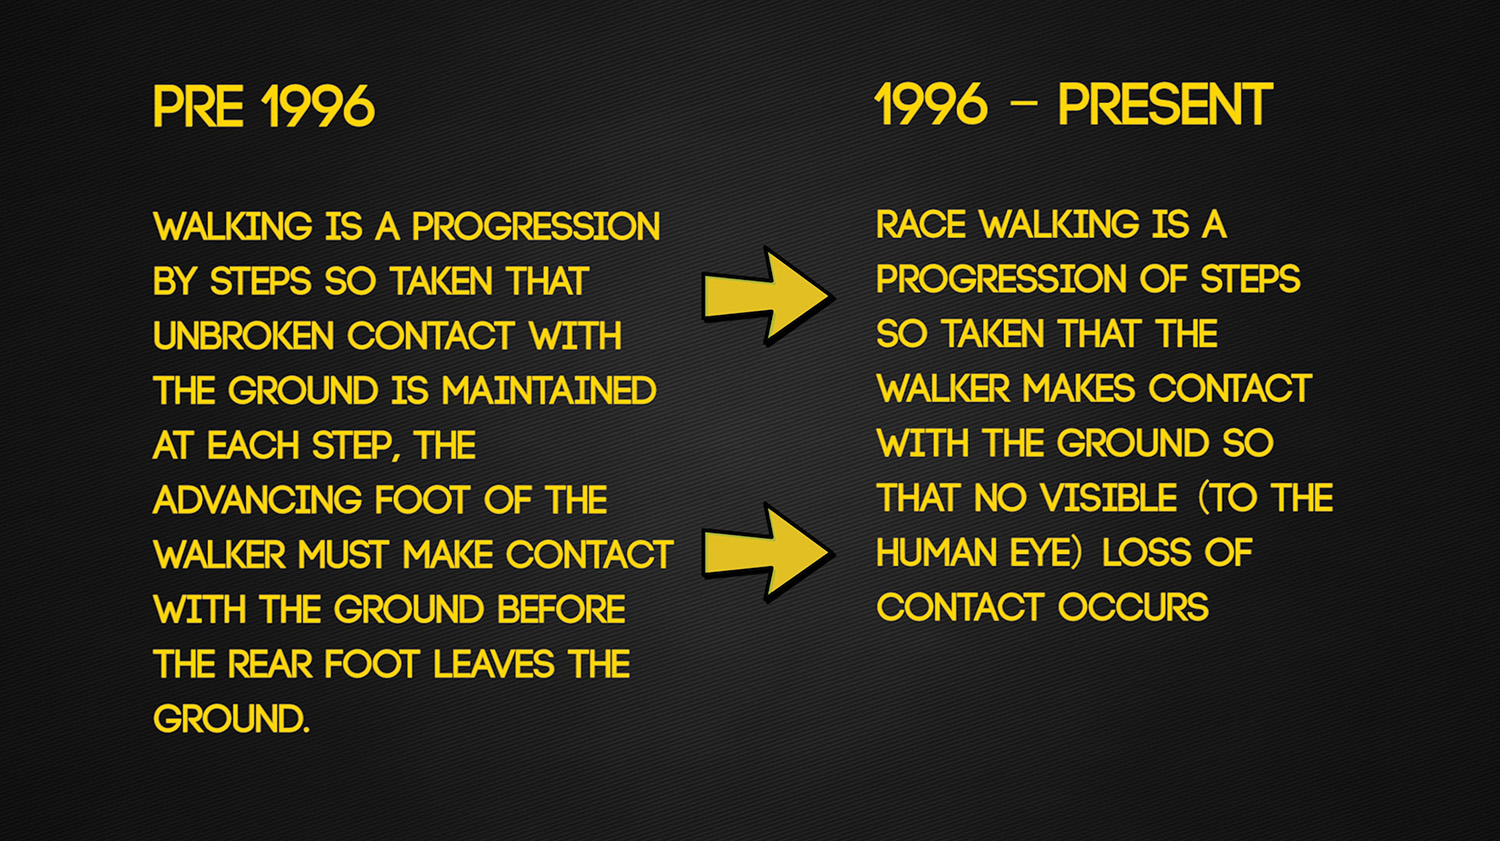 Change in the definition of race walking